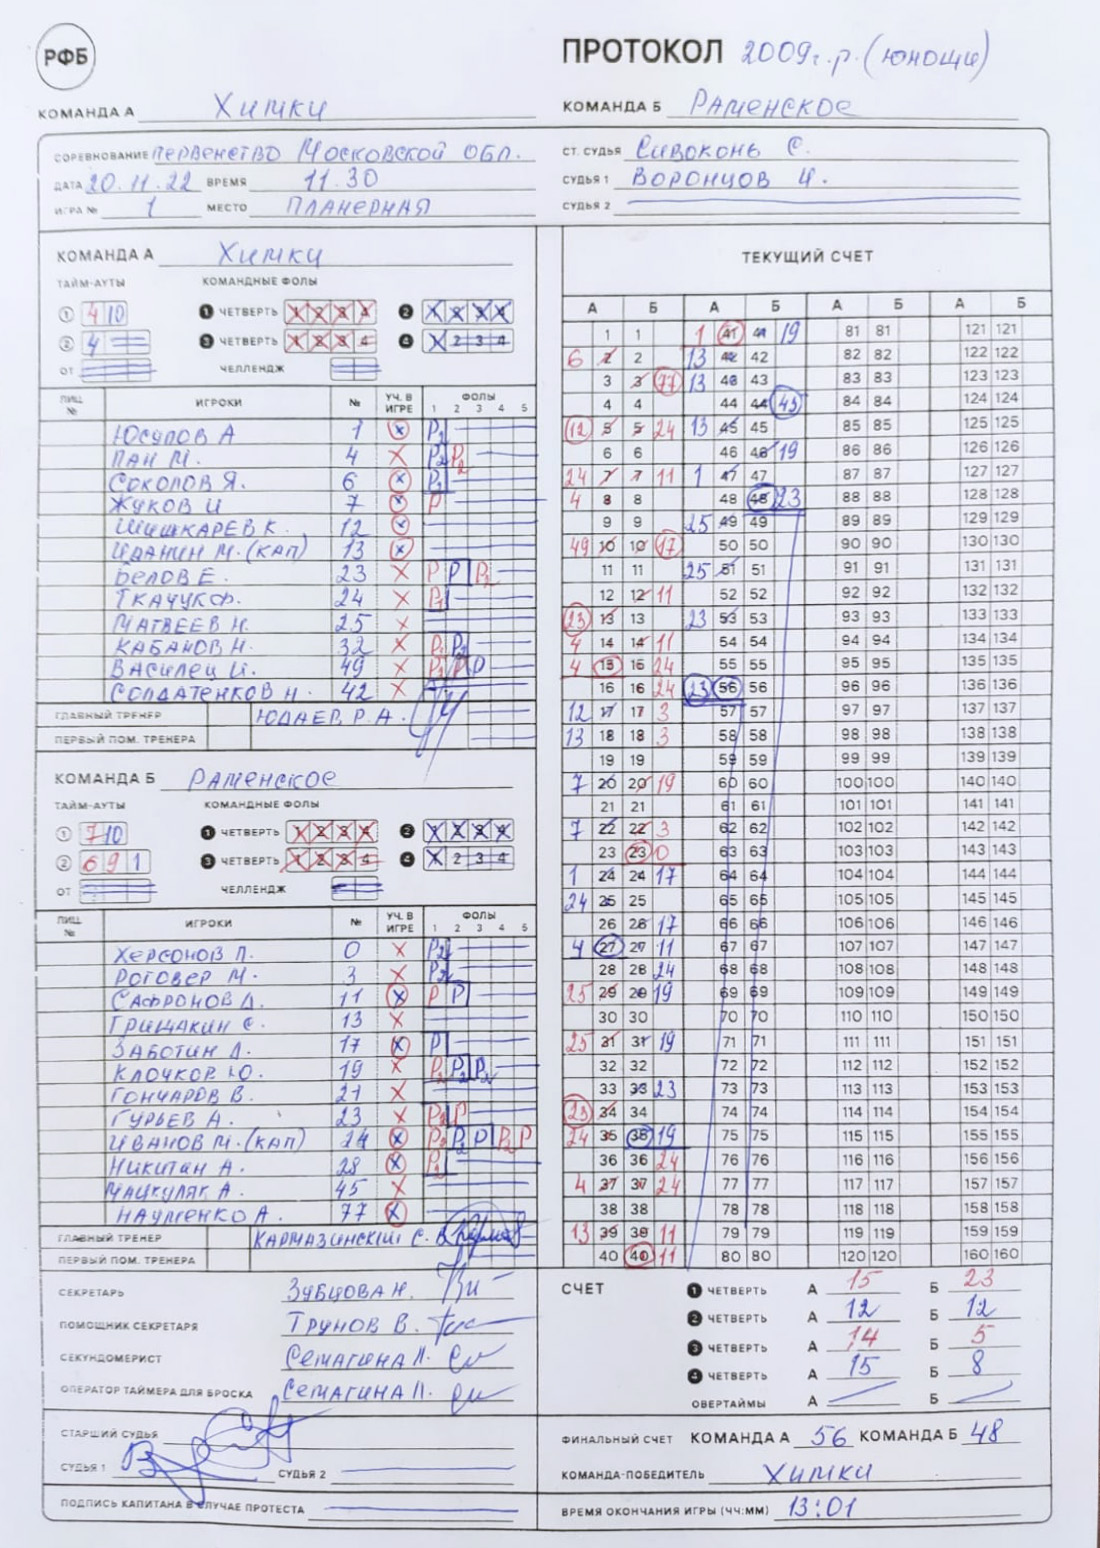 Протокол матча 2009 г.р., г. Химки, 20.11.2022